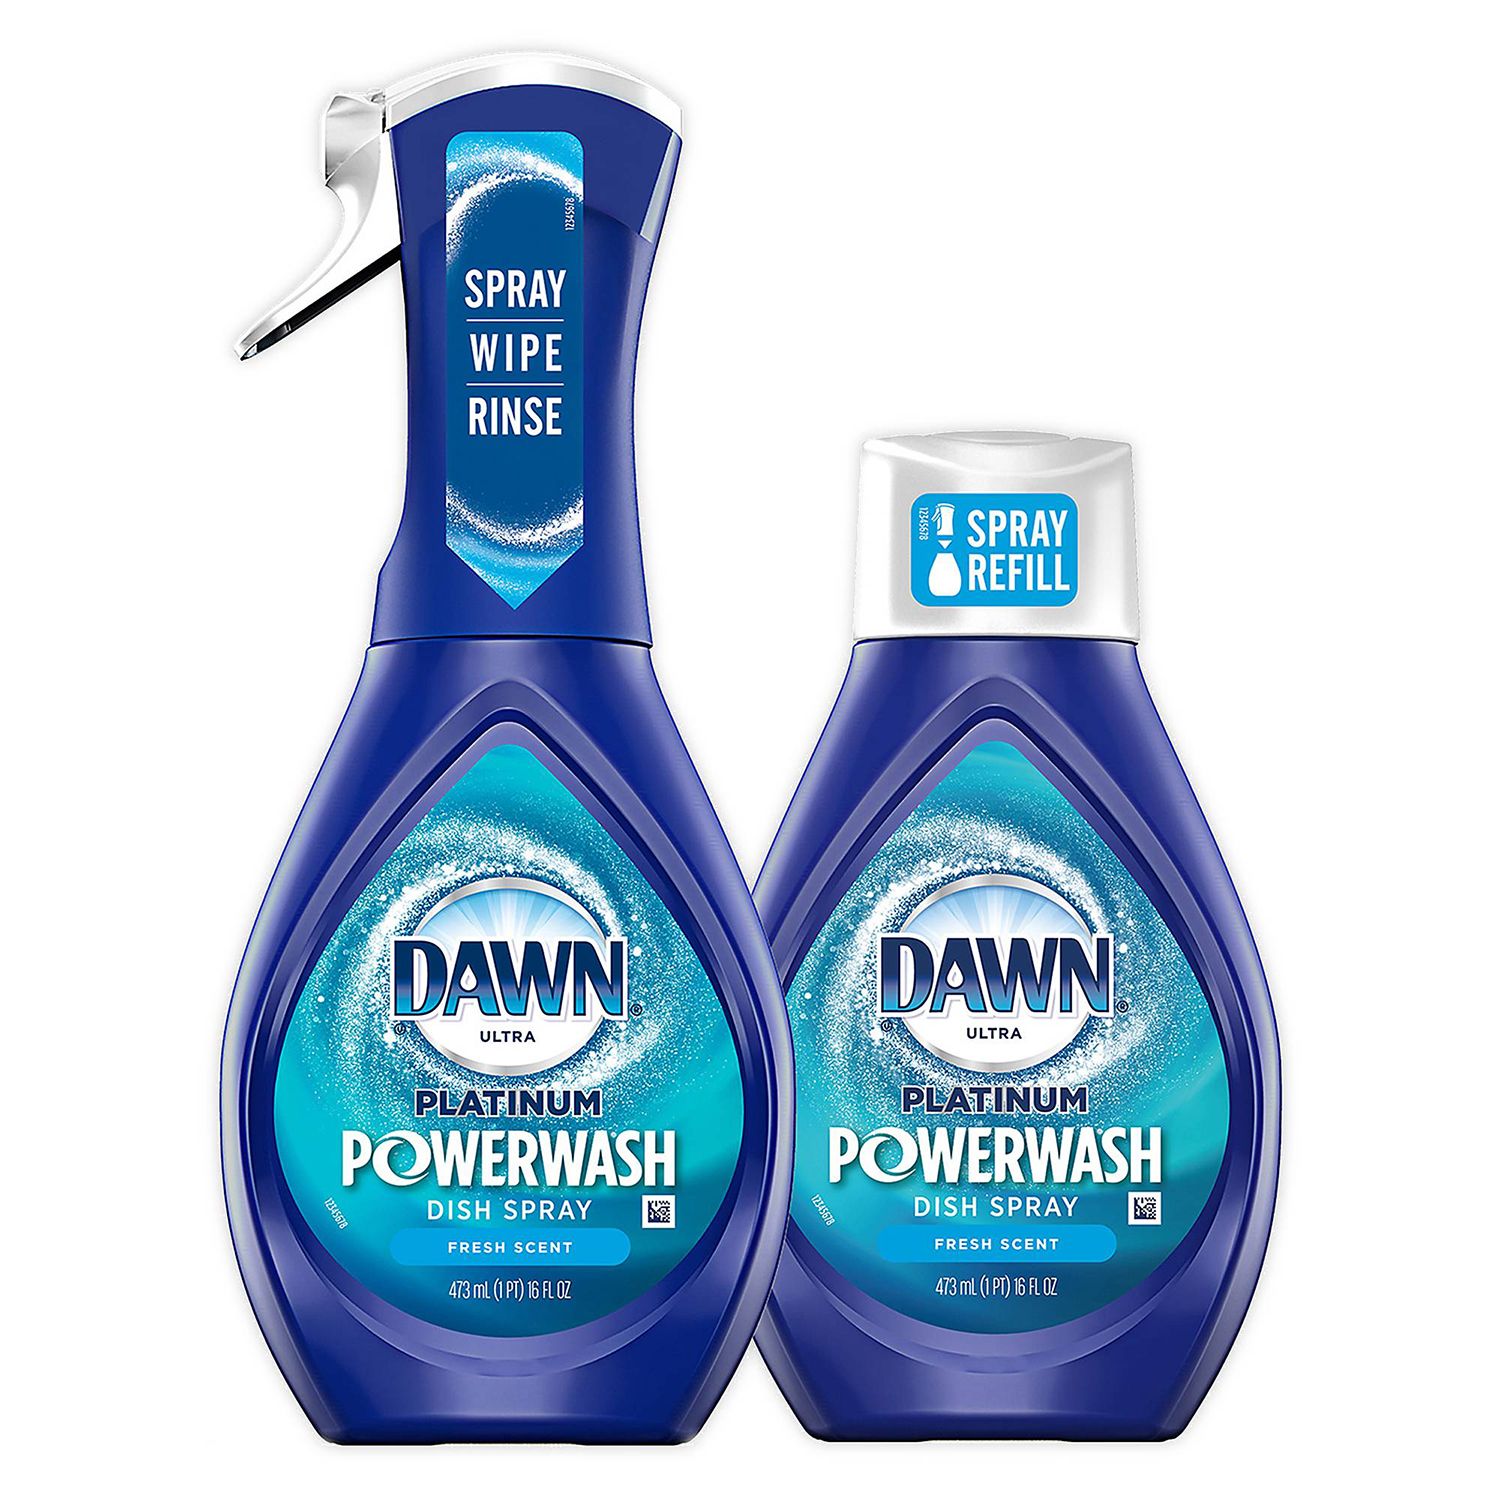 Dawn Ultra Platinum Powerwash Dish Spray Bundel